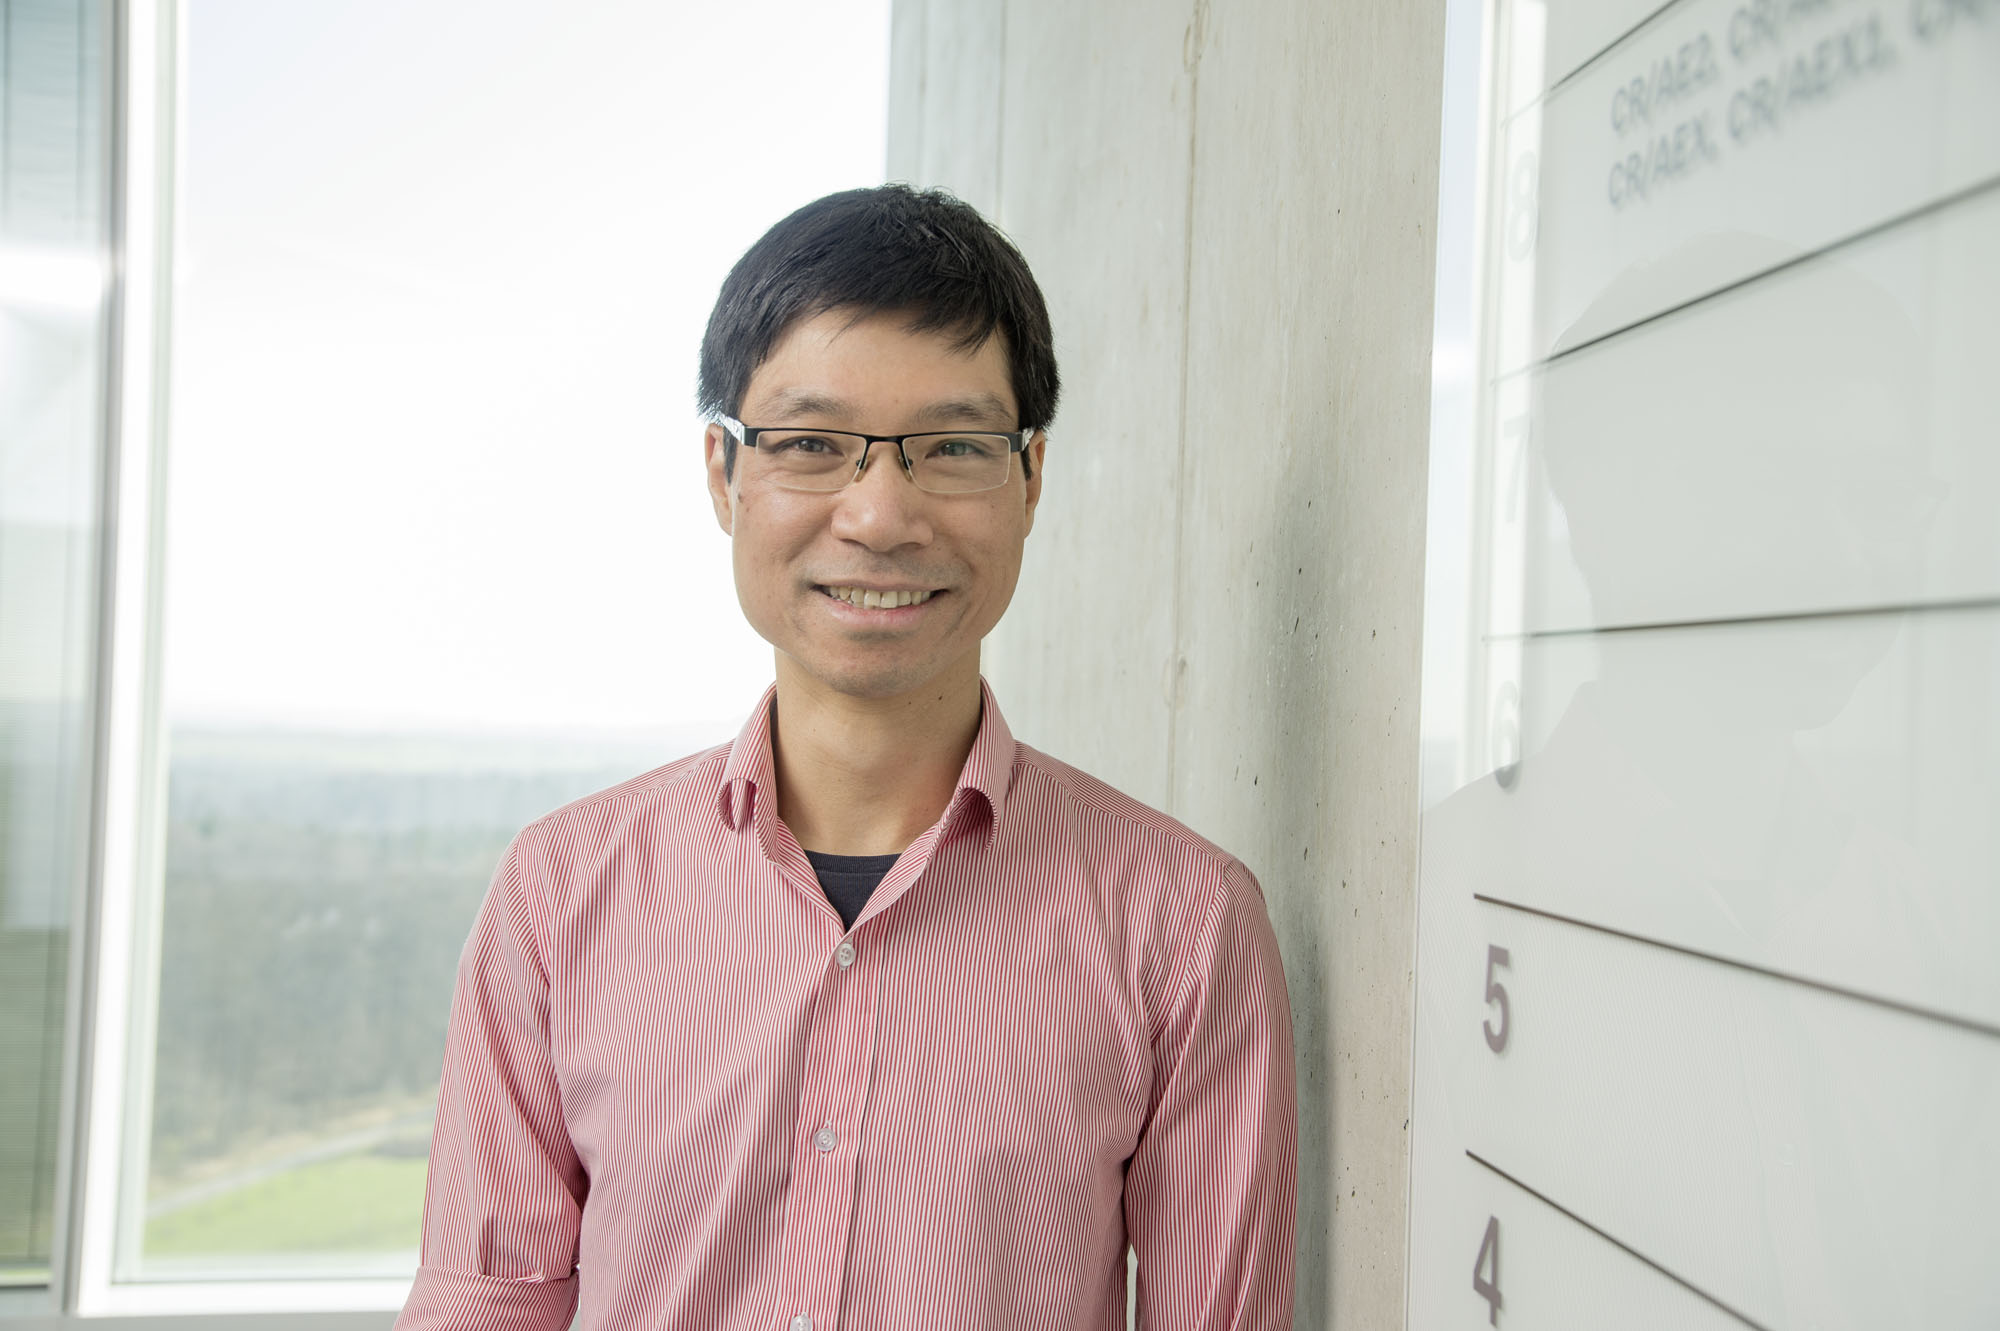 Software developer Duy Nguyen-Tuong